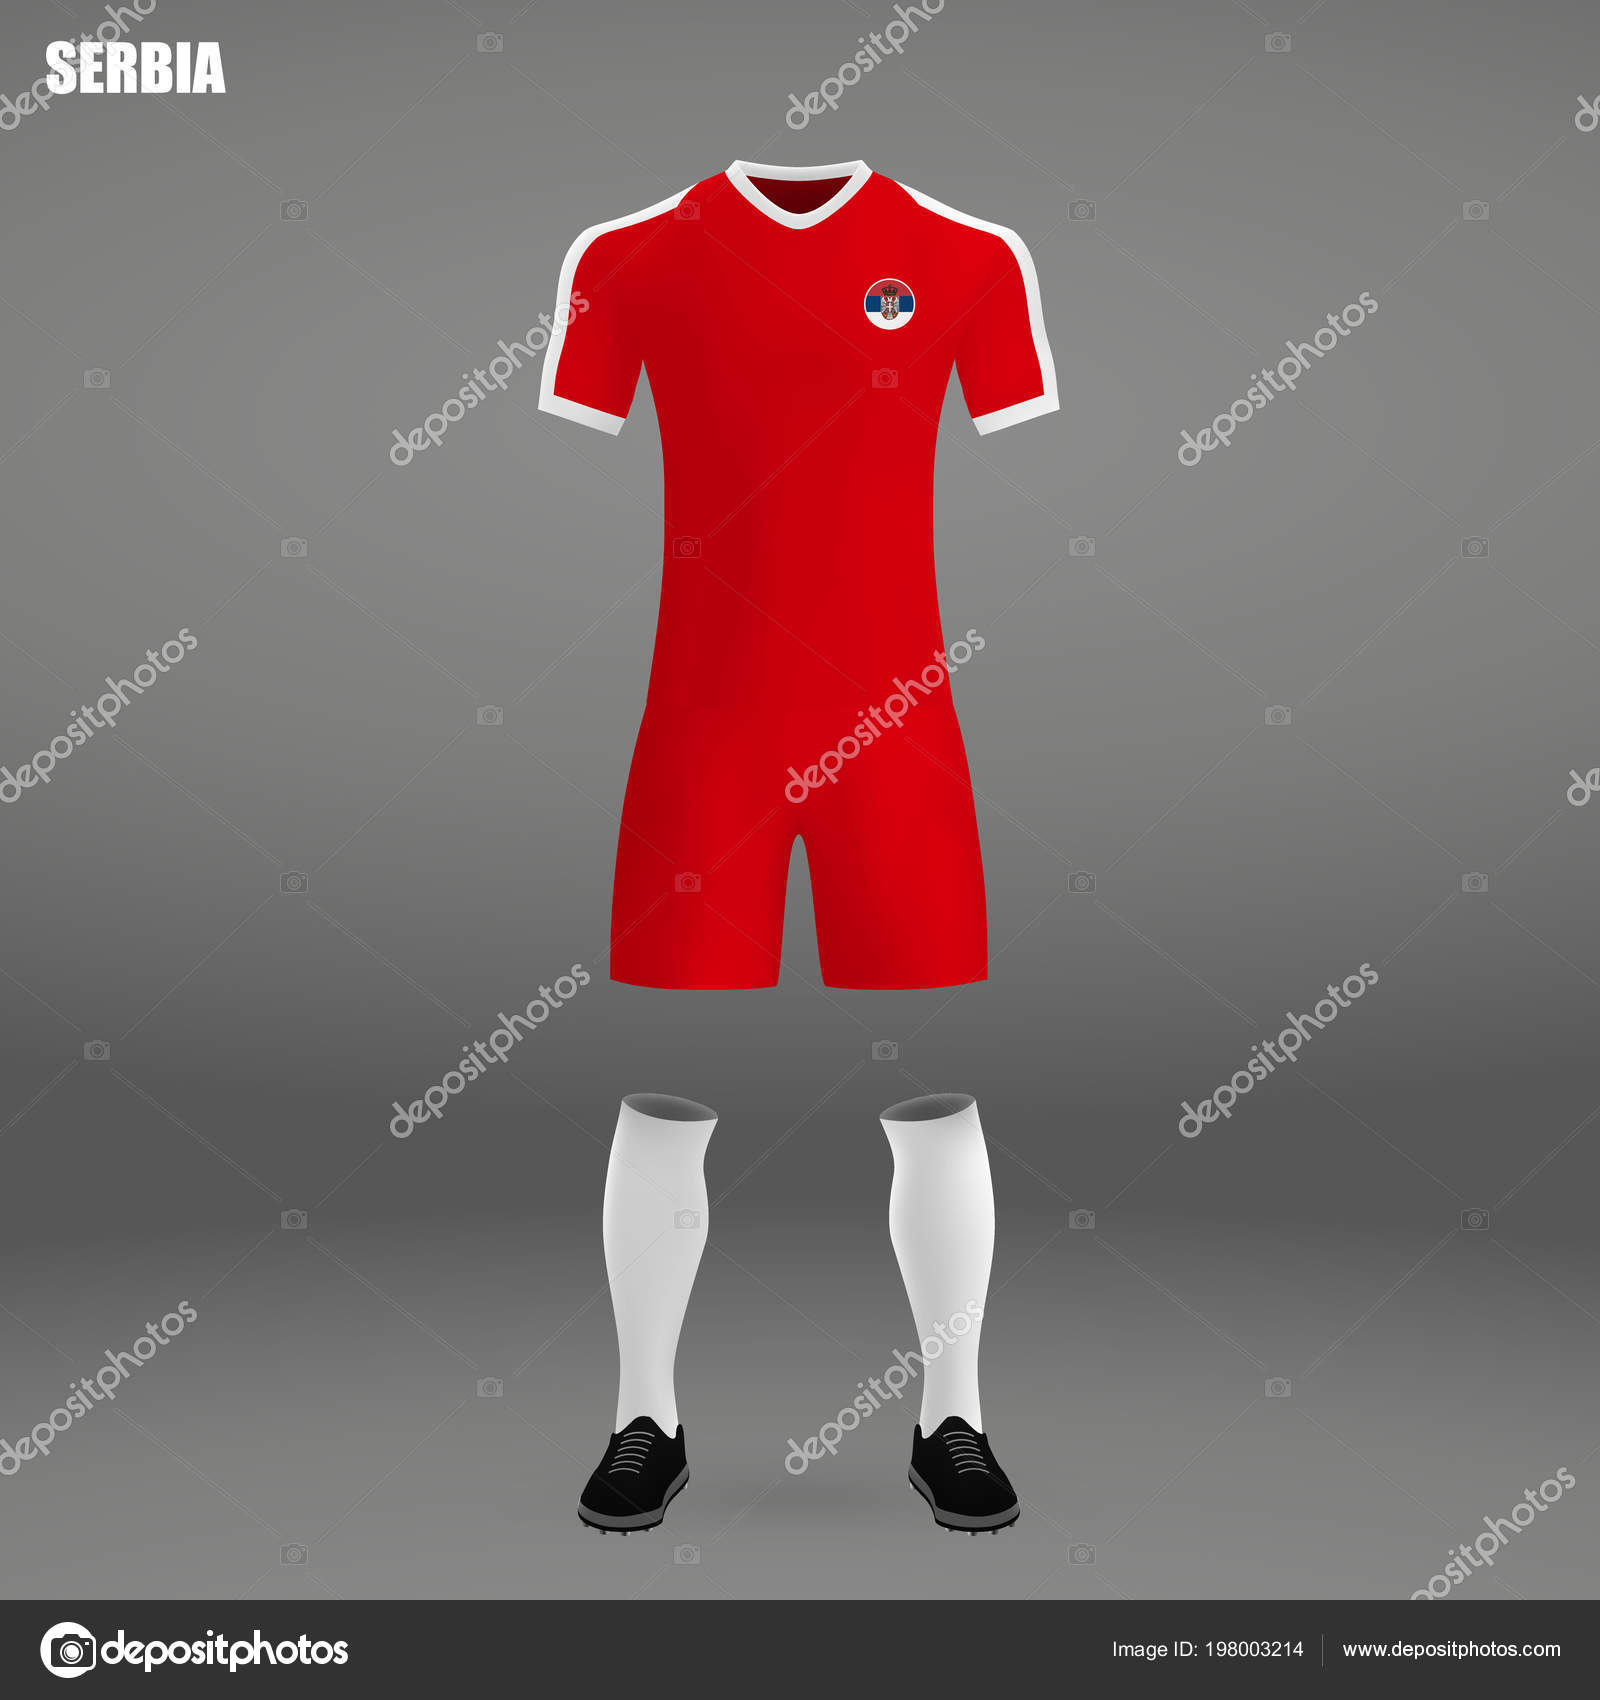 serbia soccer jersey 2018